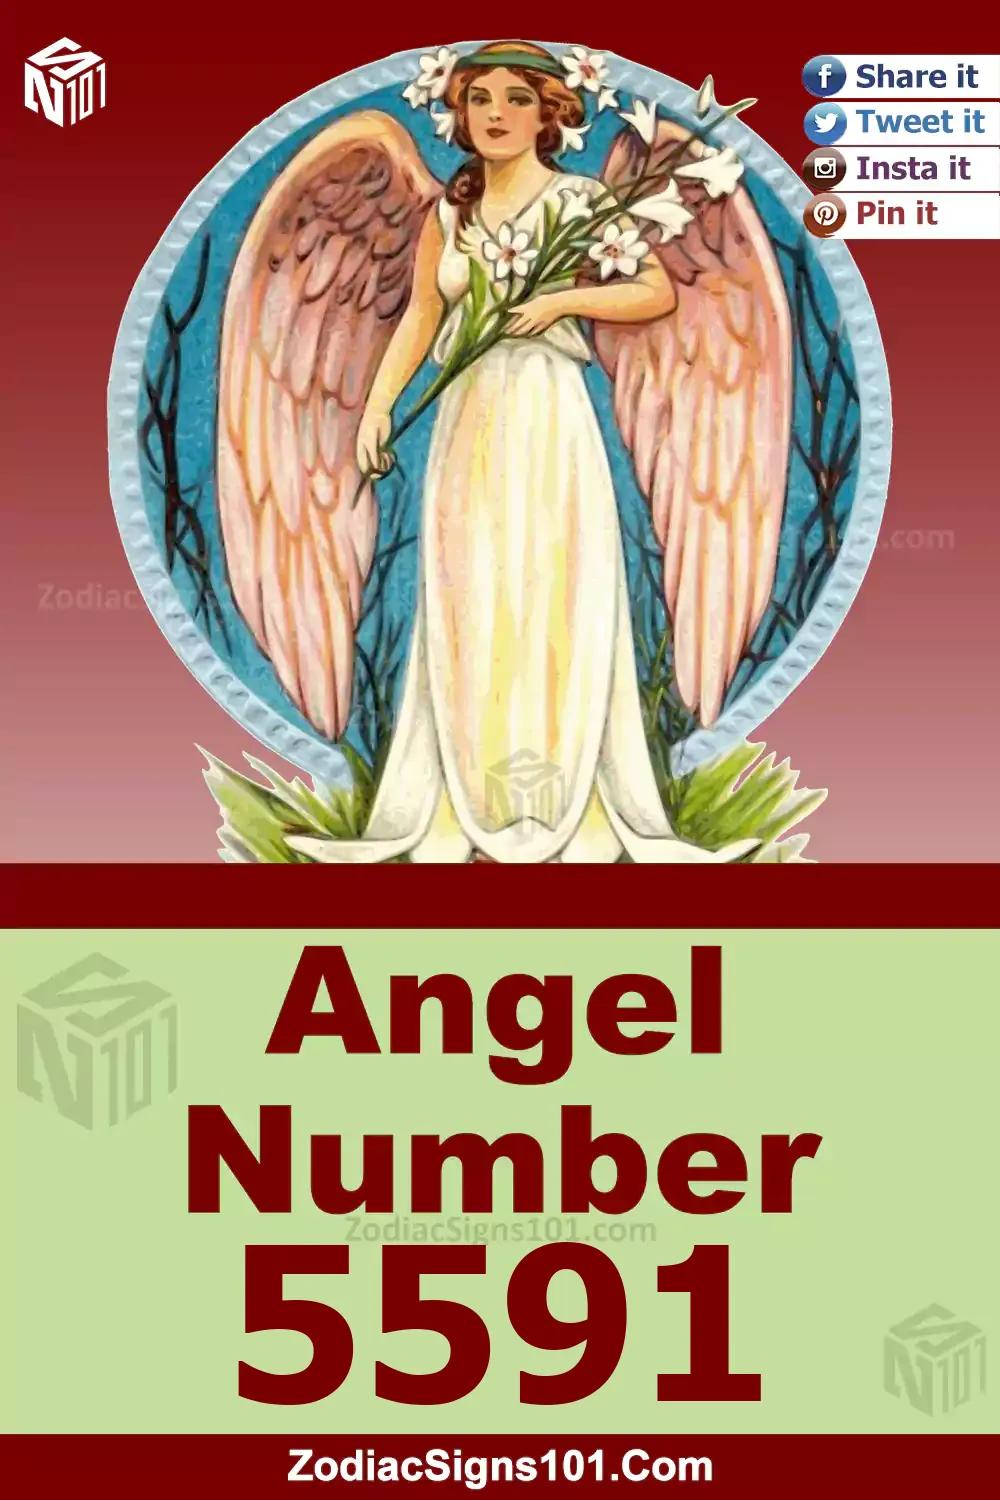 5591-Angel-Number-Meaning.jpg